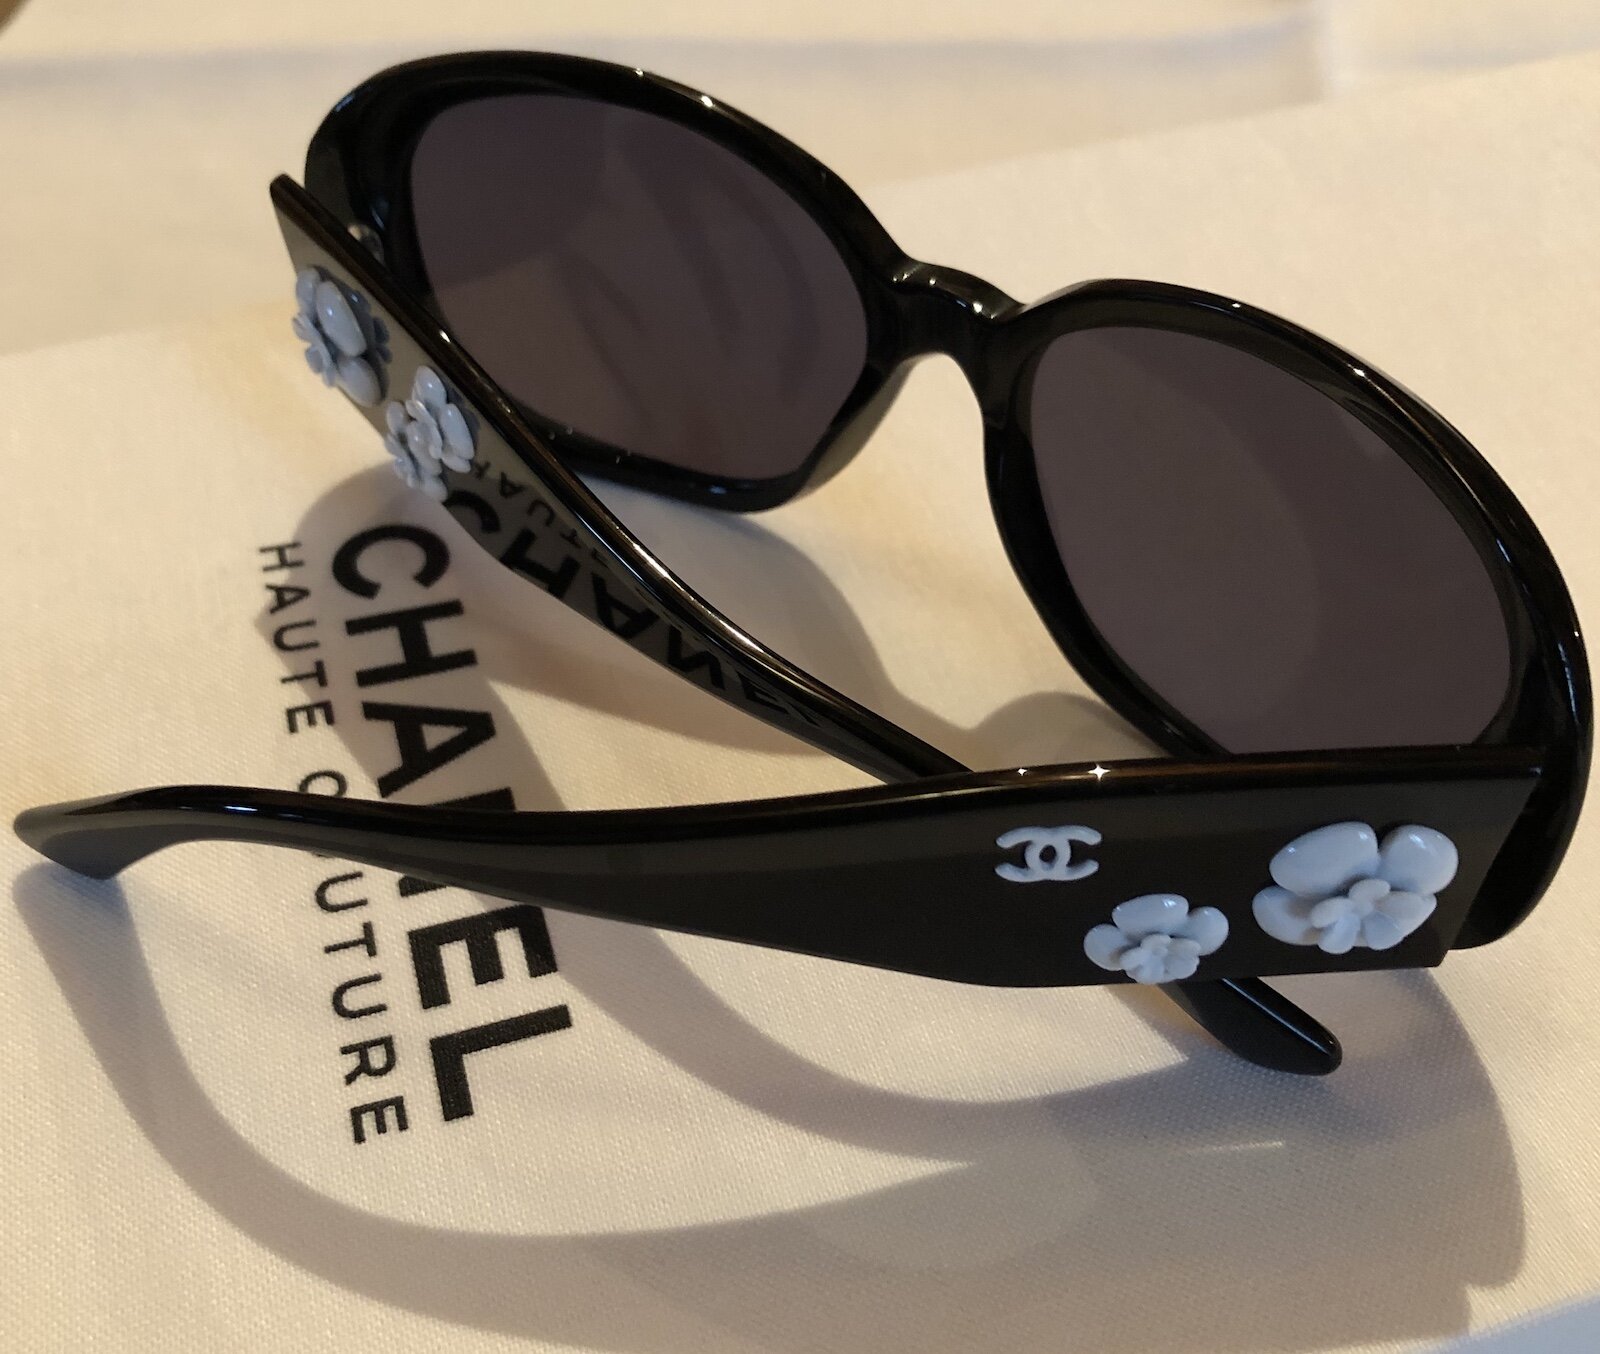 chanel sunglasses white frame